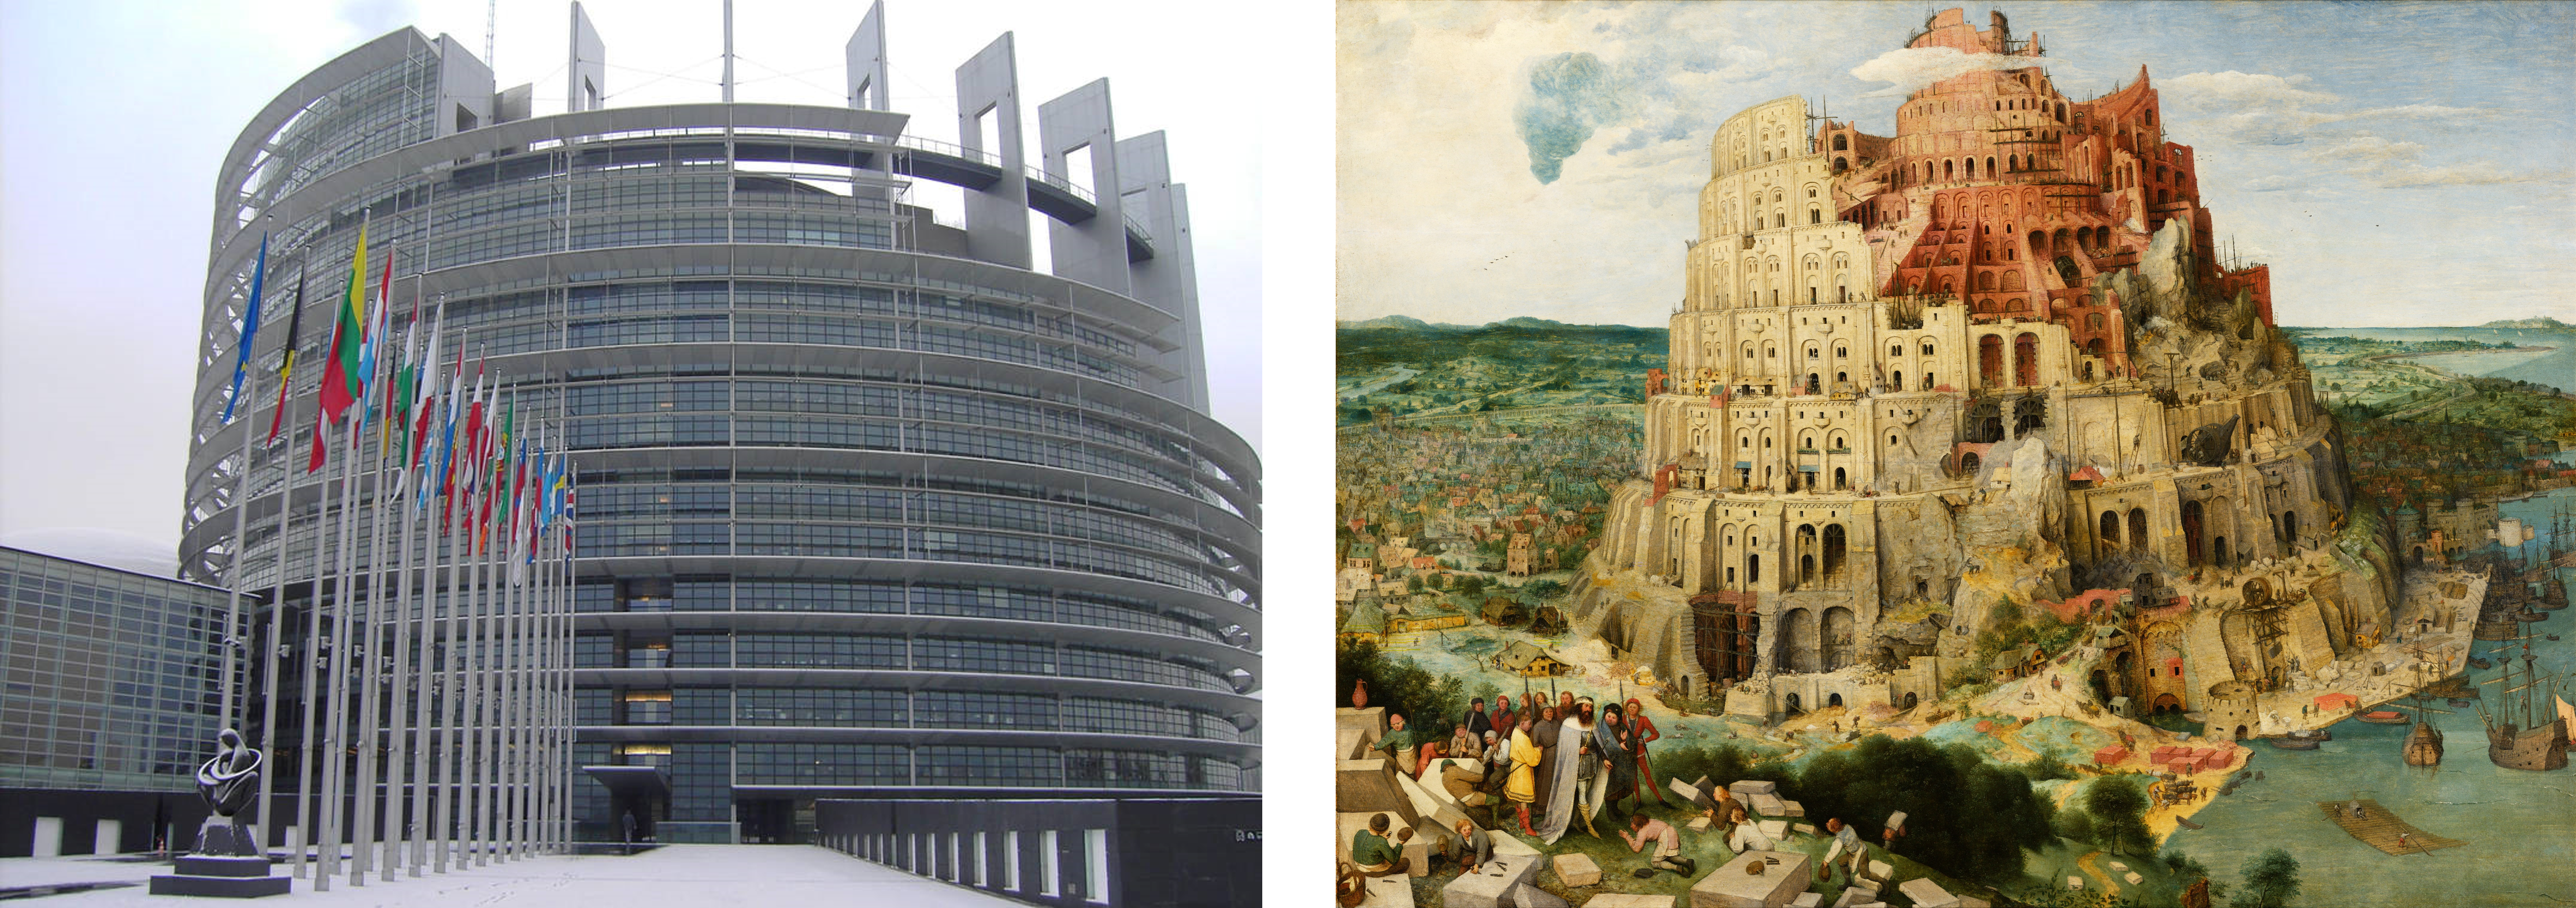 EU Parliament building resembles Tower of Babel by Bruegel